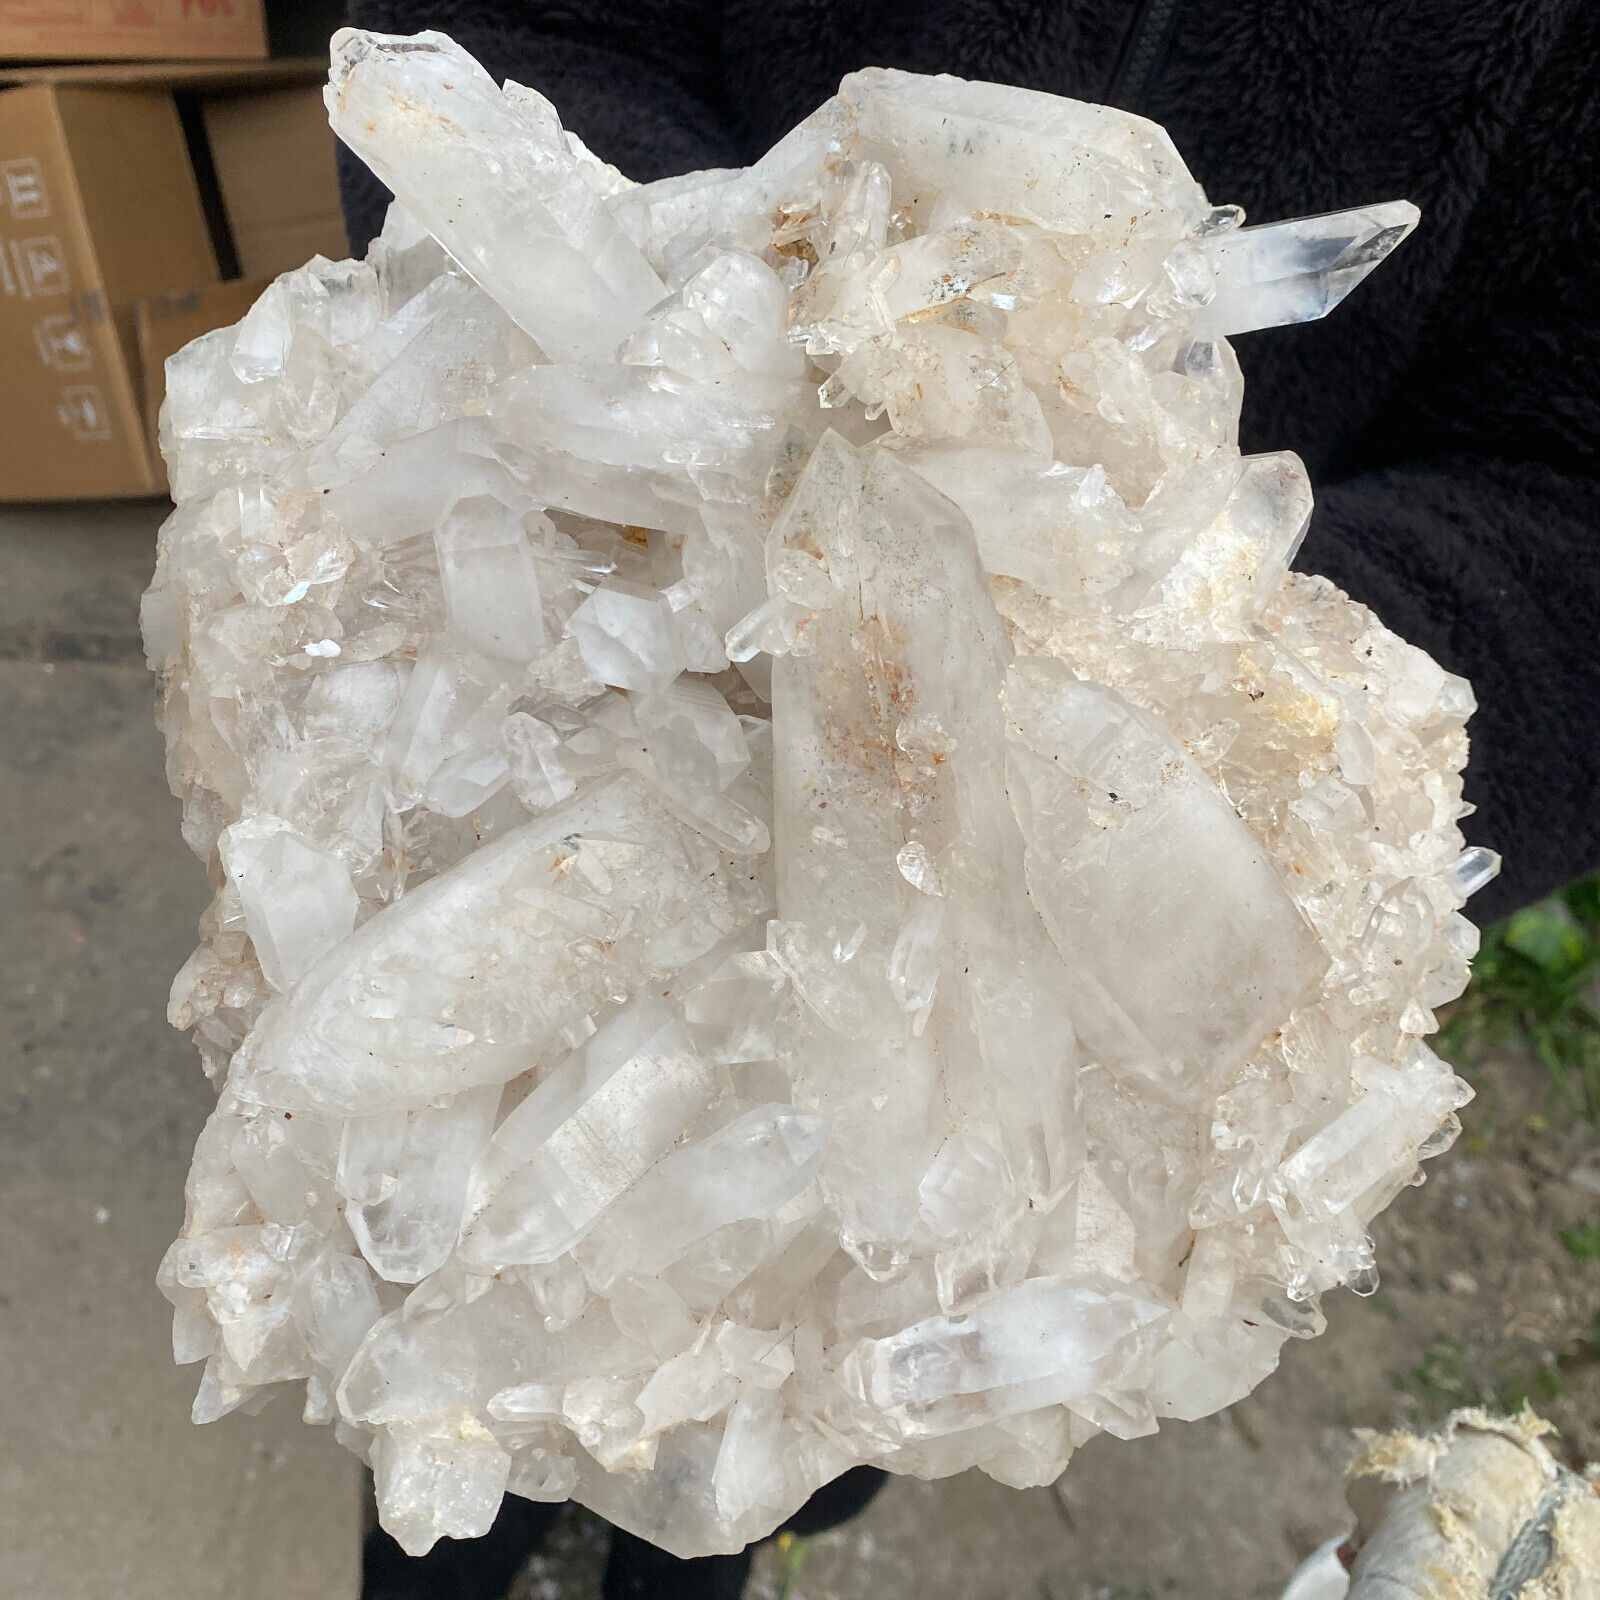 14.4lb Large Natural Clear White Quartz Crystal Cluster Rough Healing Specimen